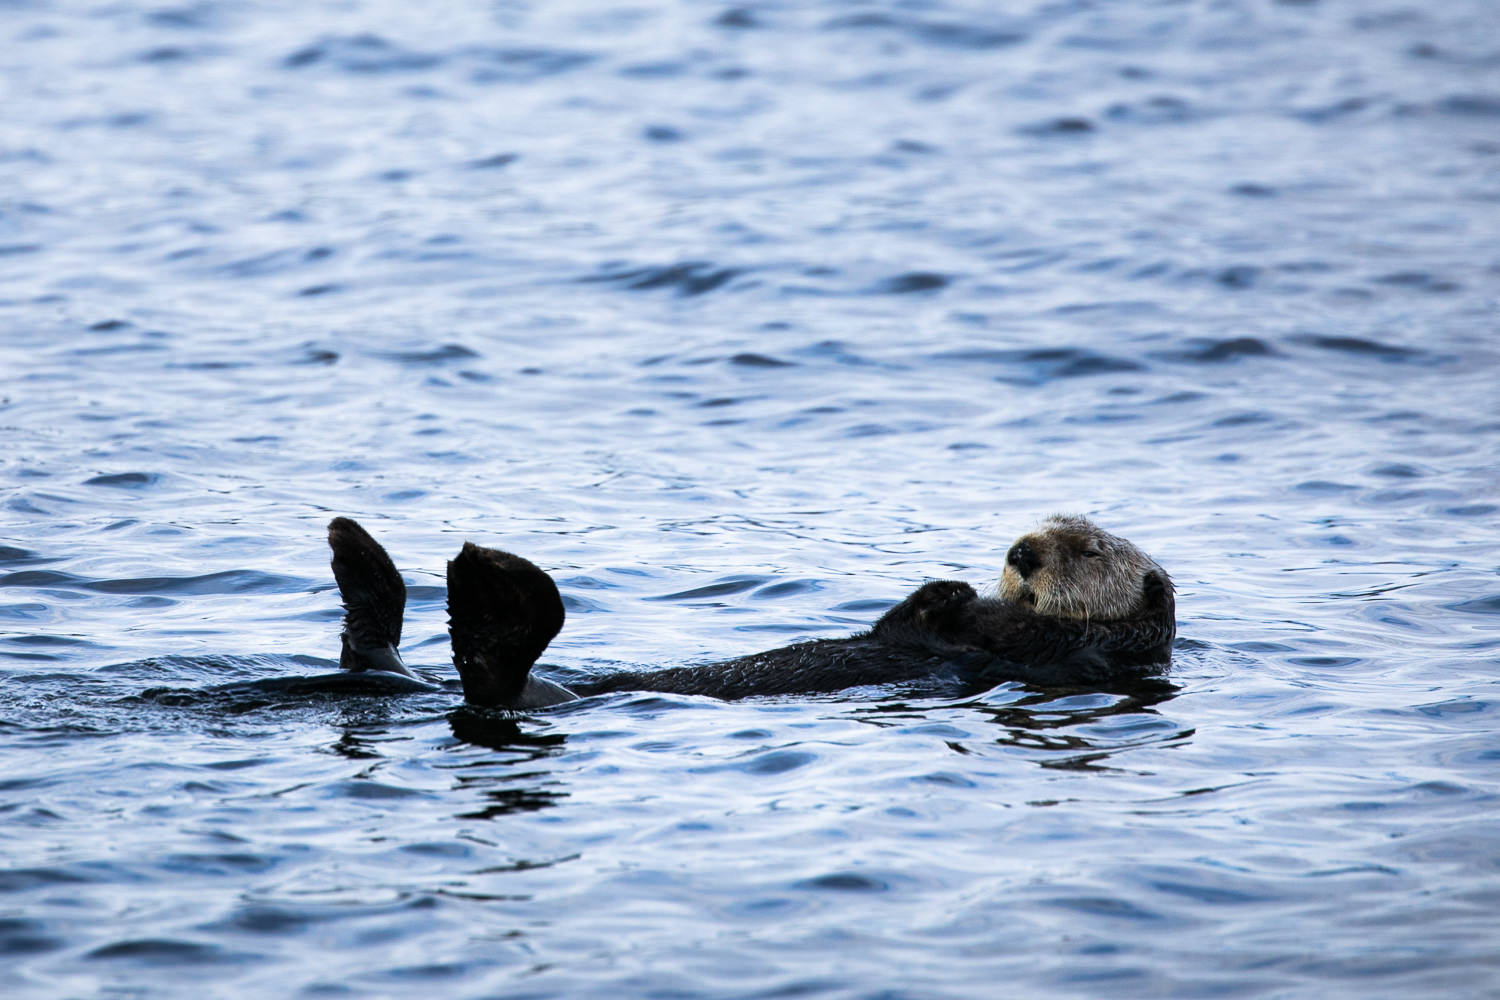 sea-otter-great-bear-rainforest.jpg